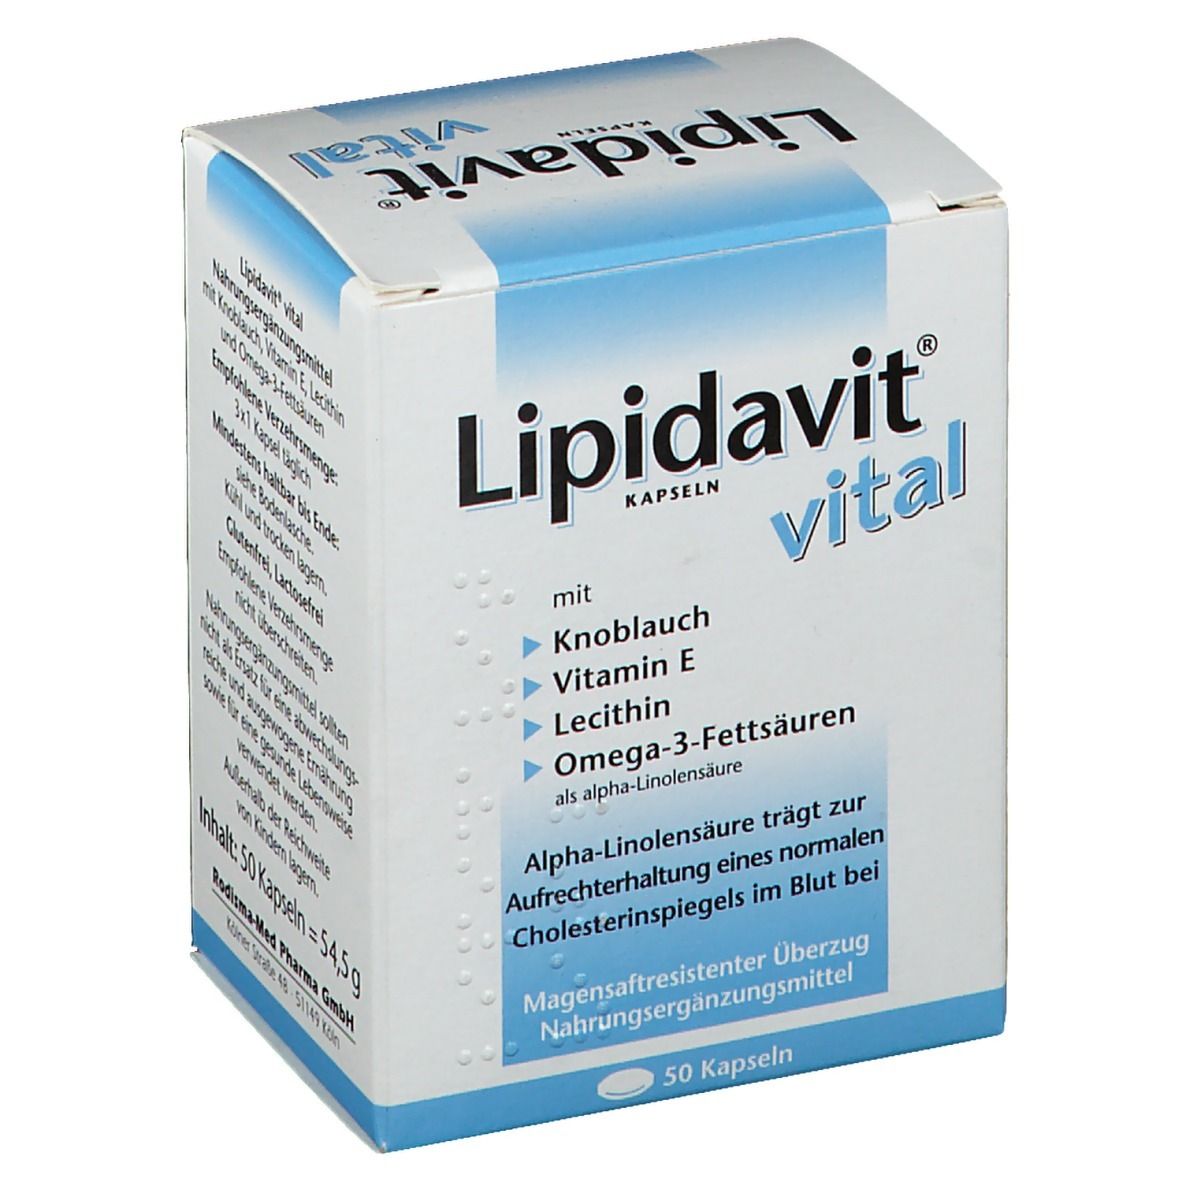 Lipidavit® vital